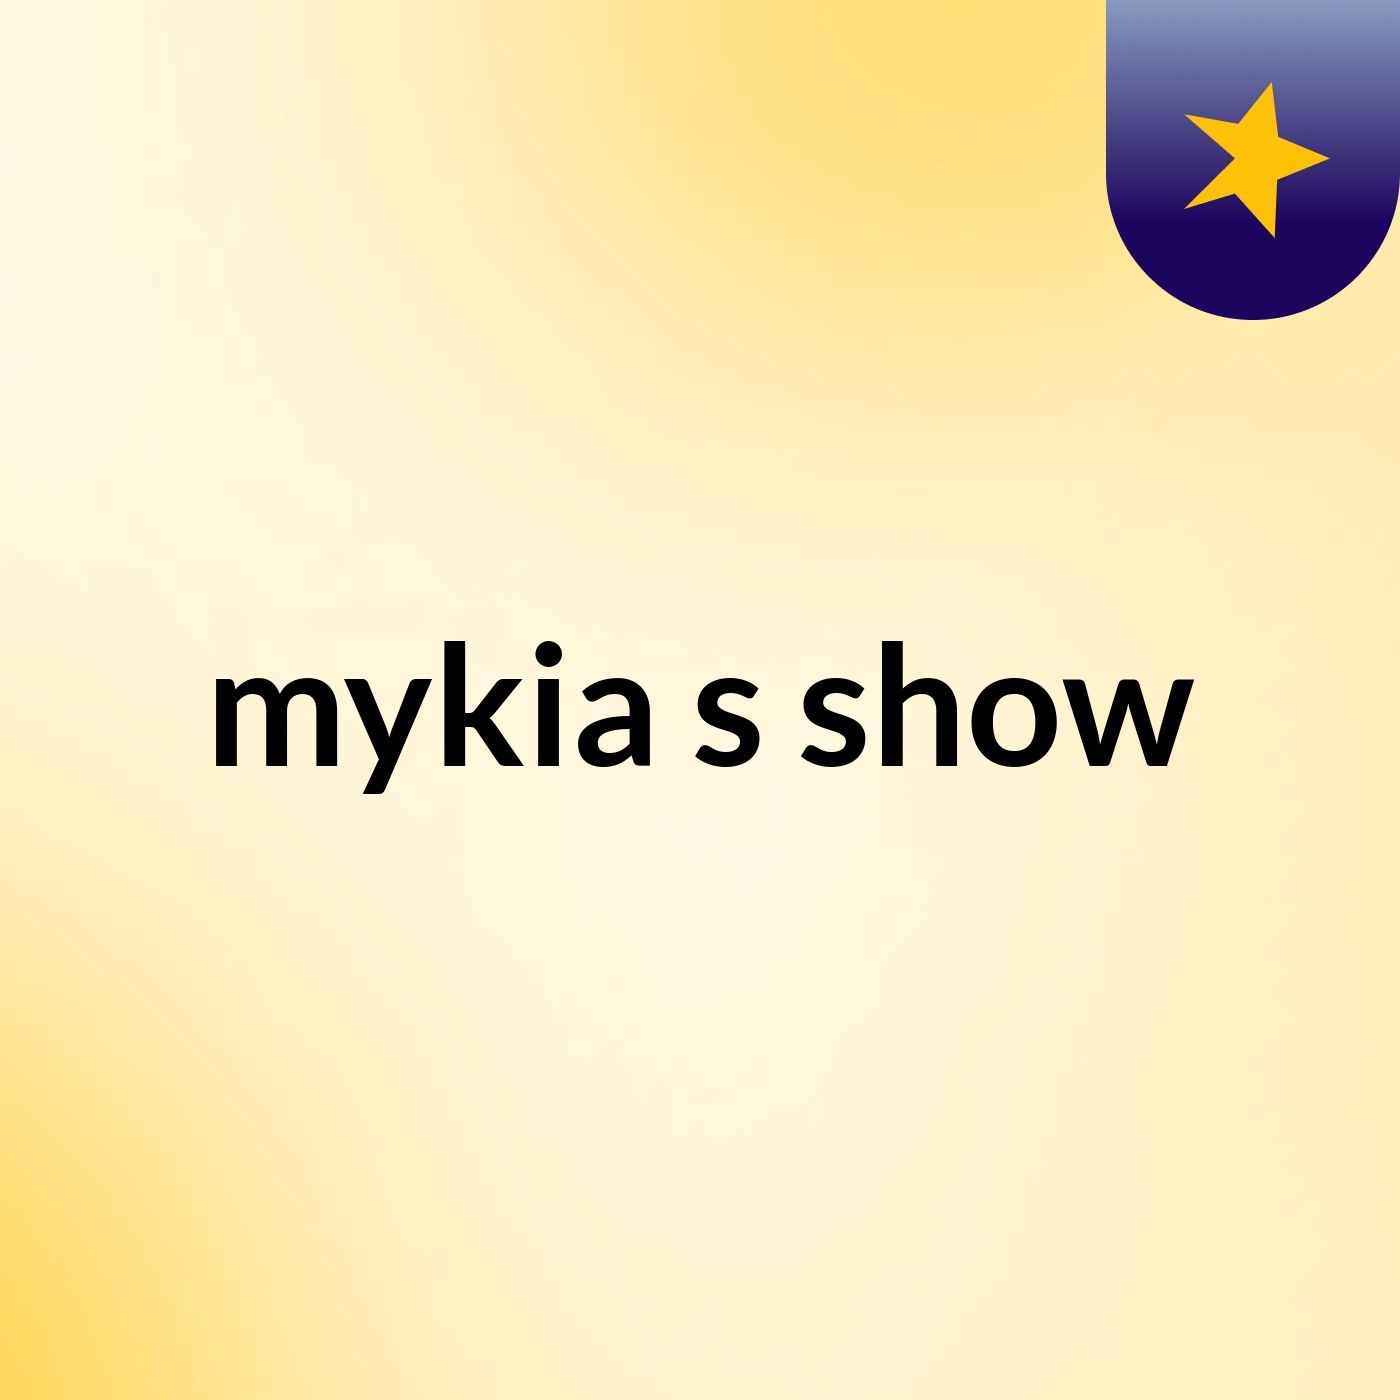 mykia's show